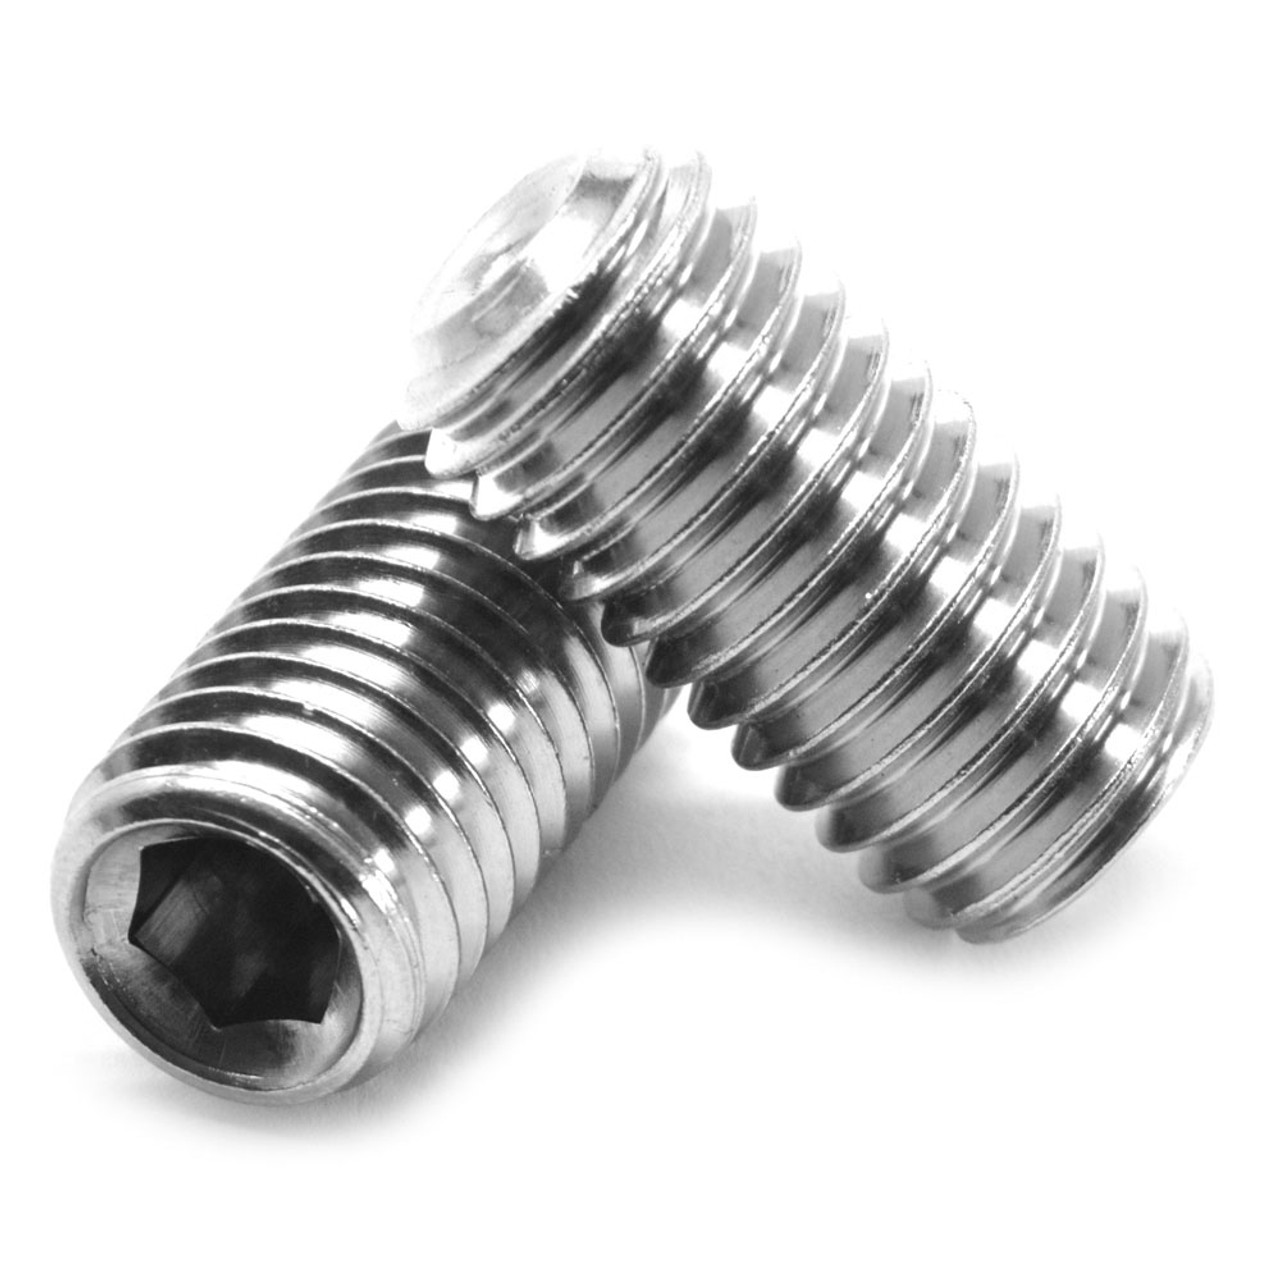 Alloy Steel Set Screws, Brass Tip, 5/16-18 x 3/8 Thread Length, 20 Pcs